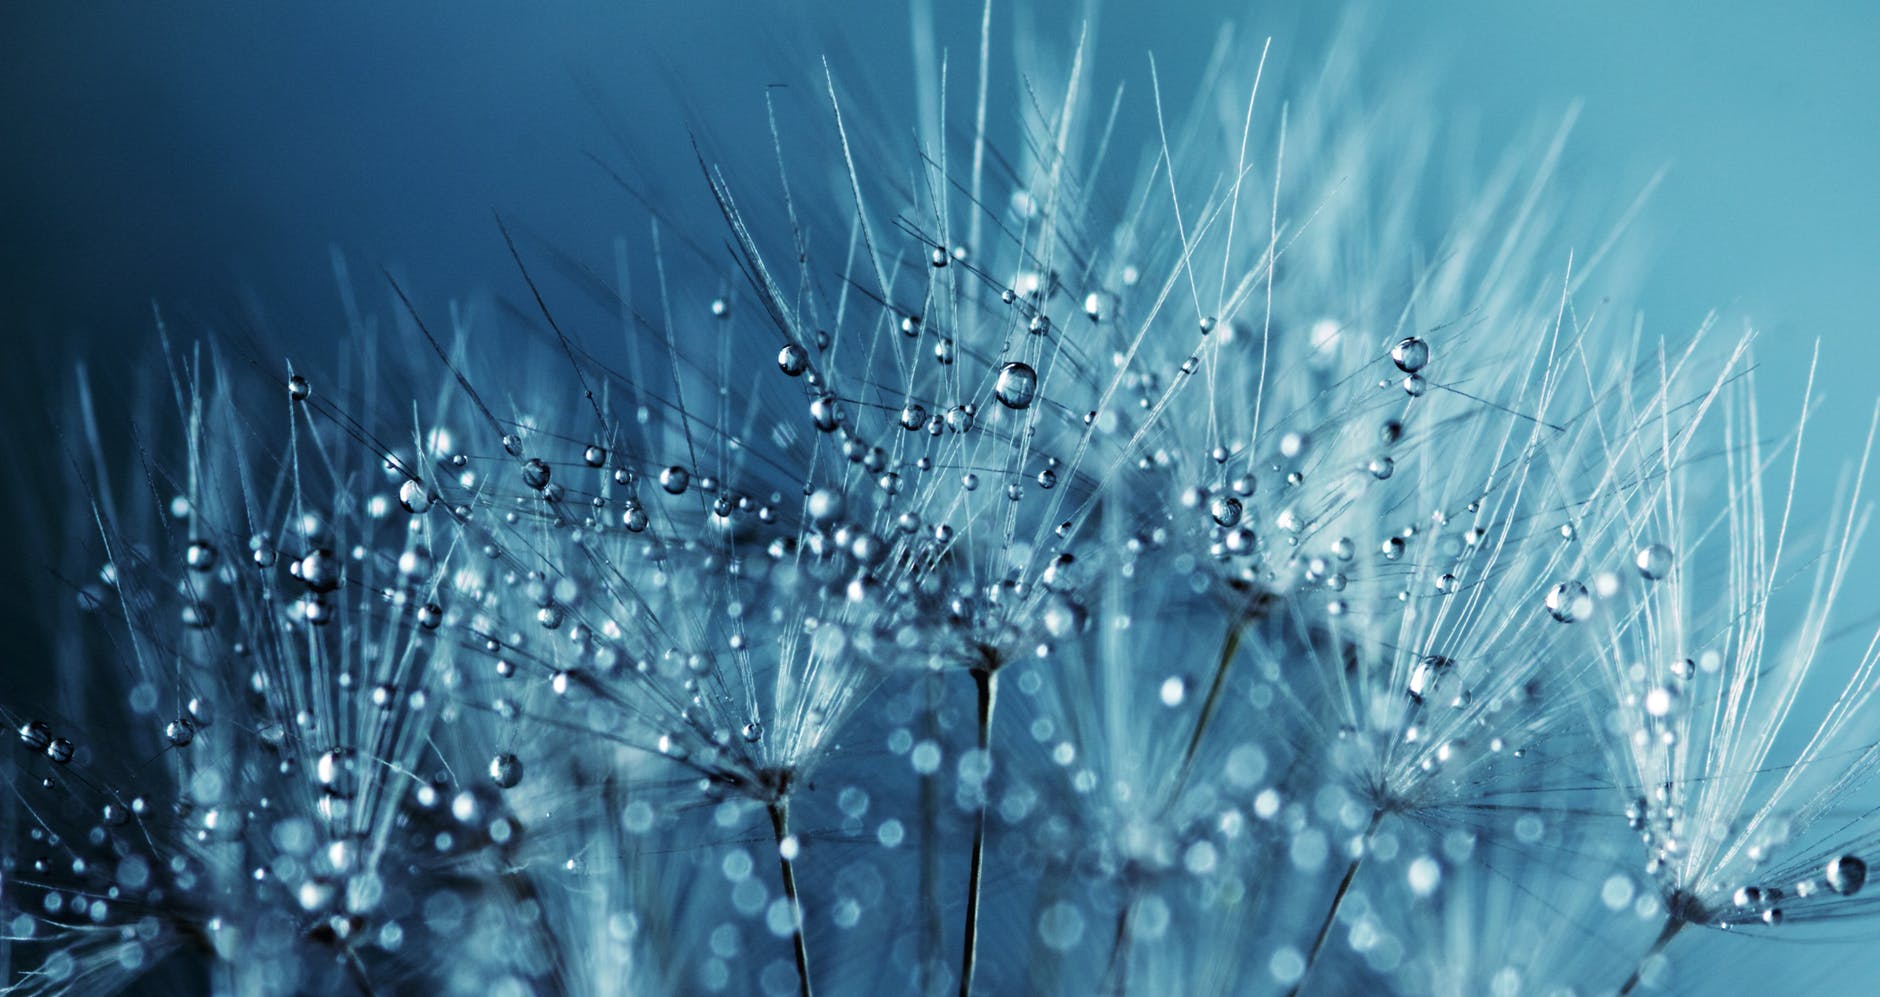 dandelion holding water droplets